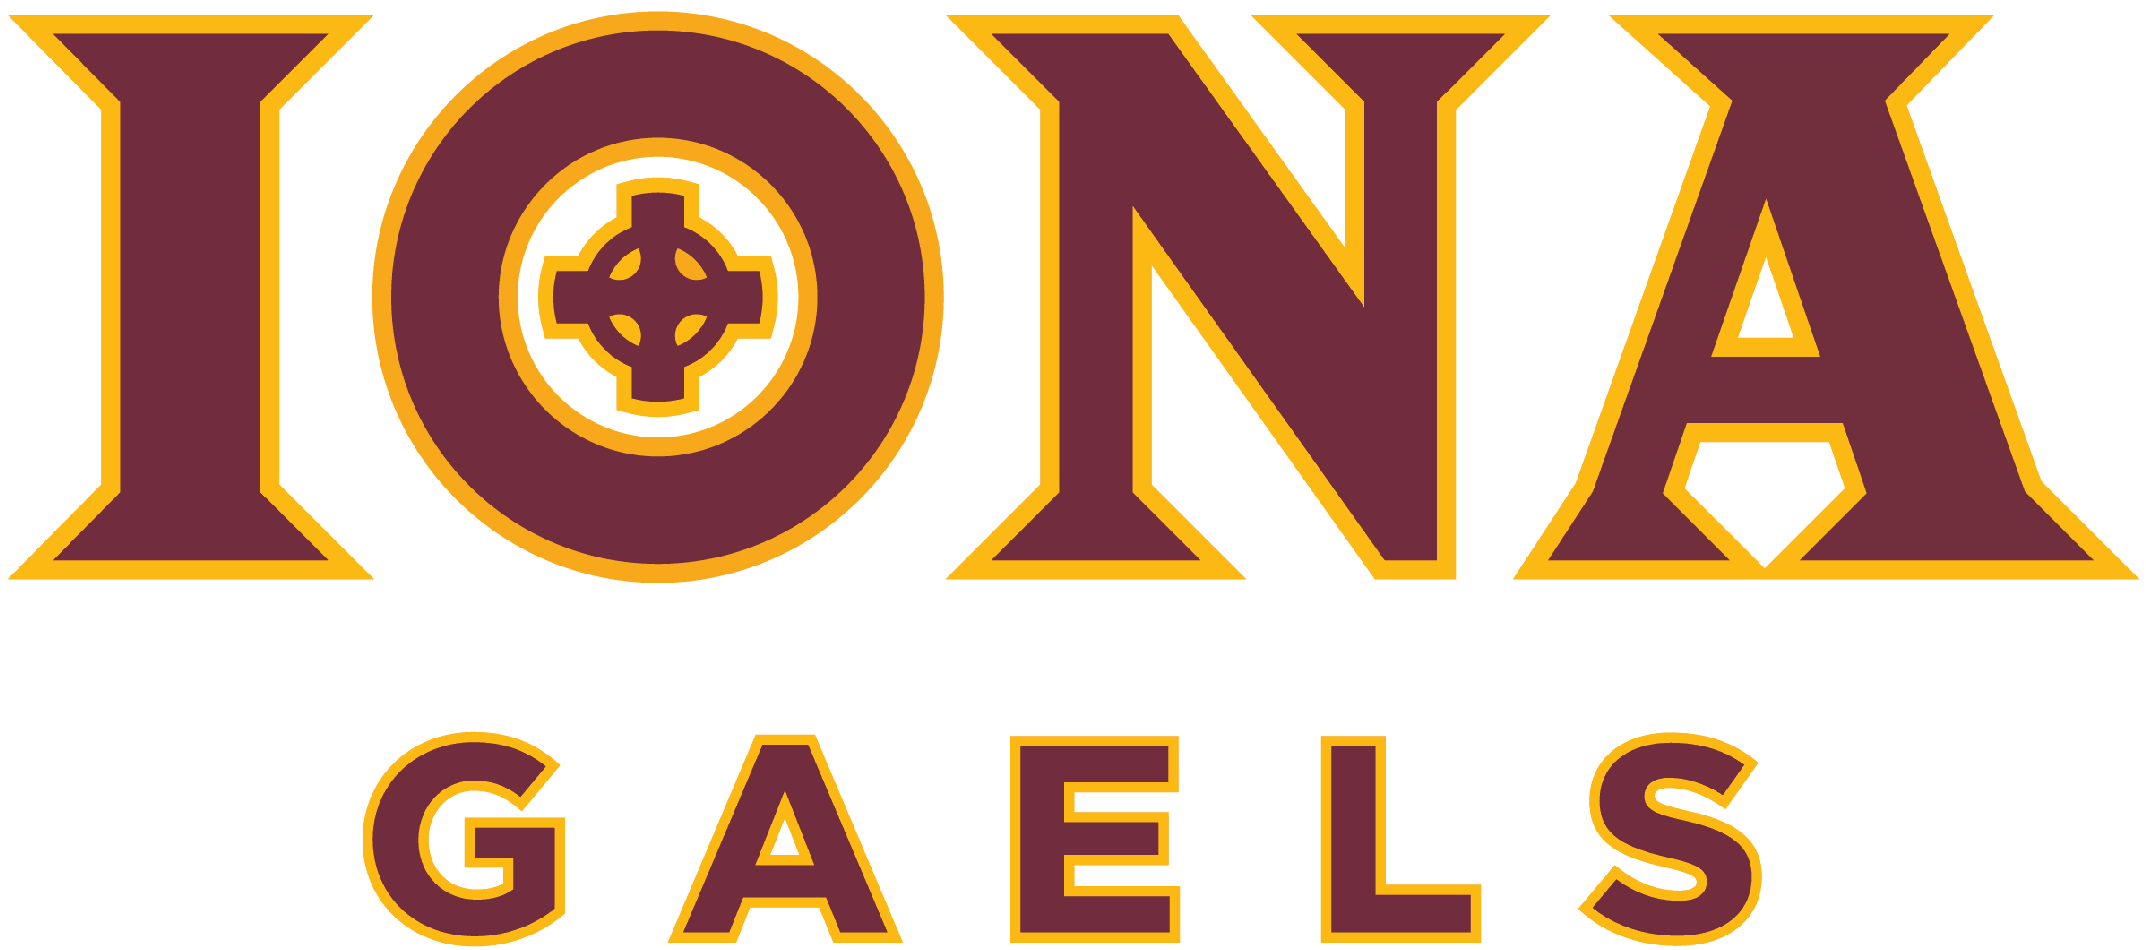 Iona Logo - File:Iona Gaels logo New.png - Wikimedia Commons